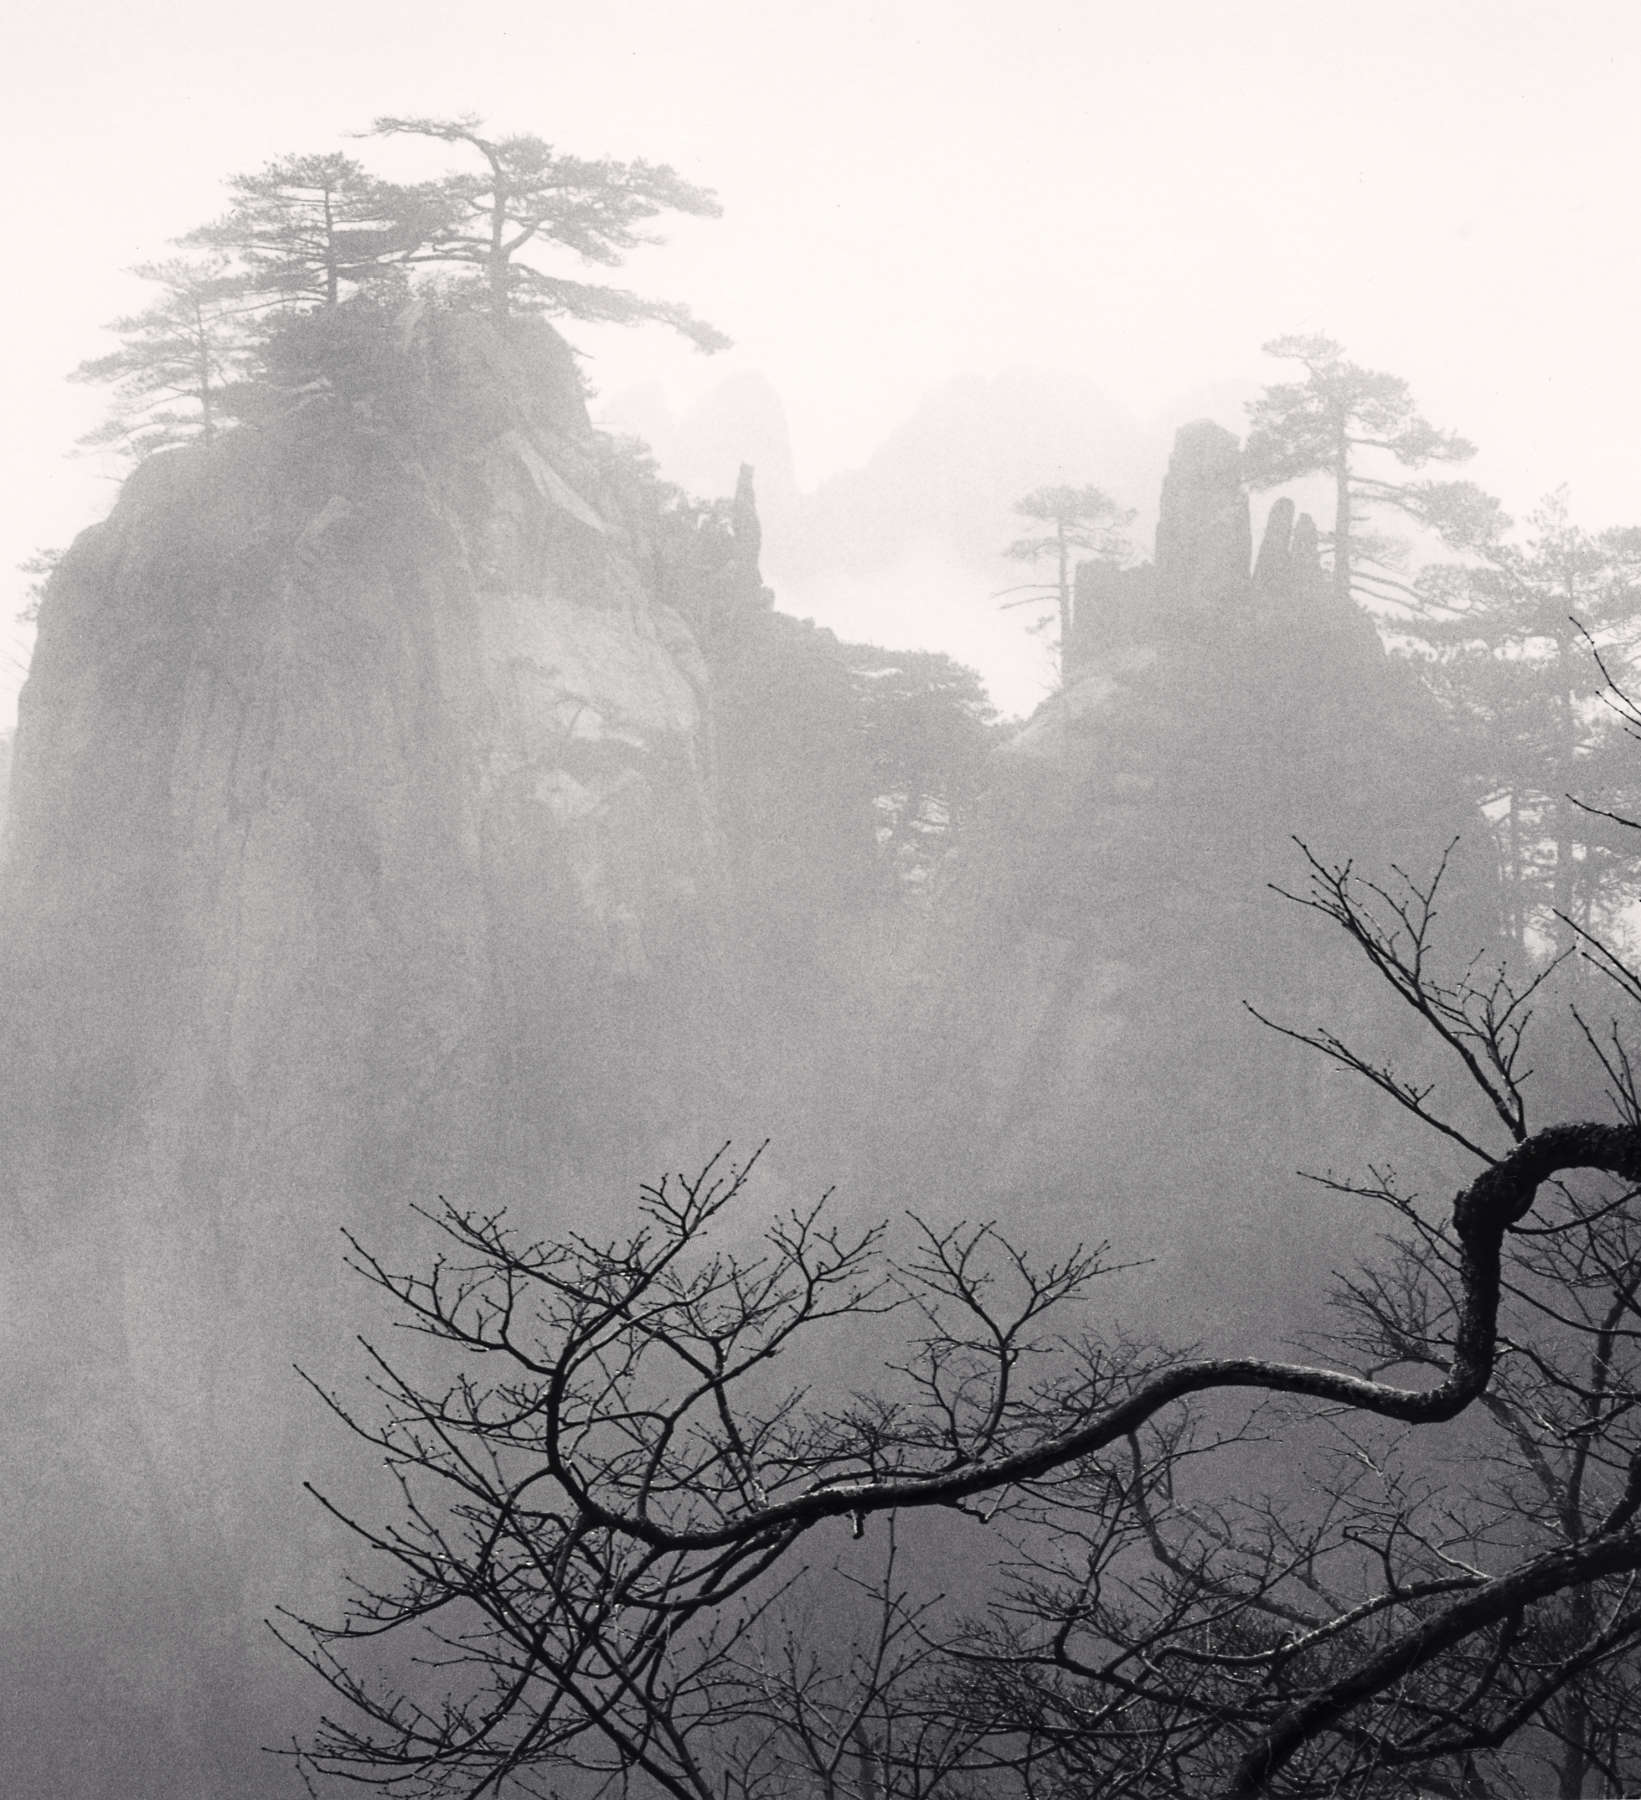 Michael Kenna, Huangshan Mountains, Study 52 (16x20), Anhui, China 